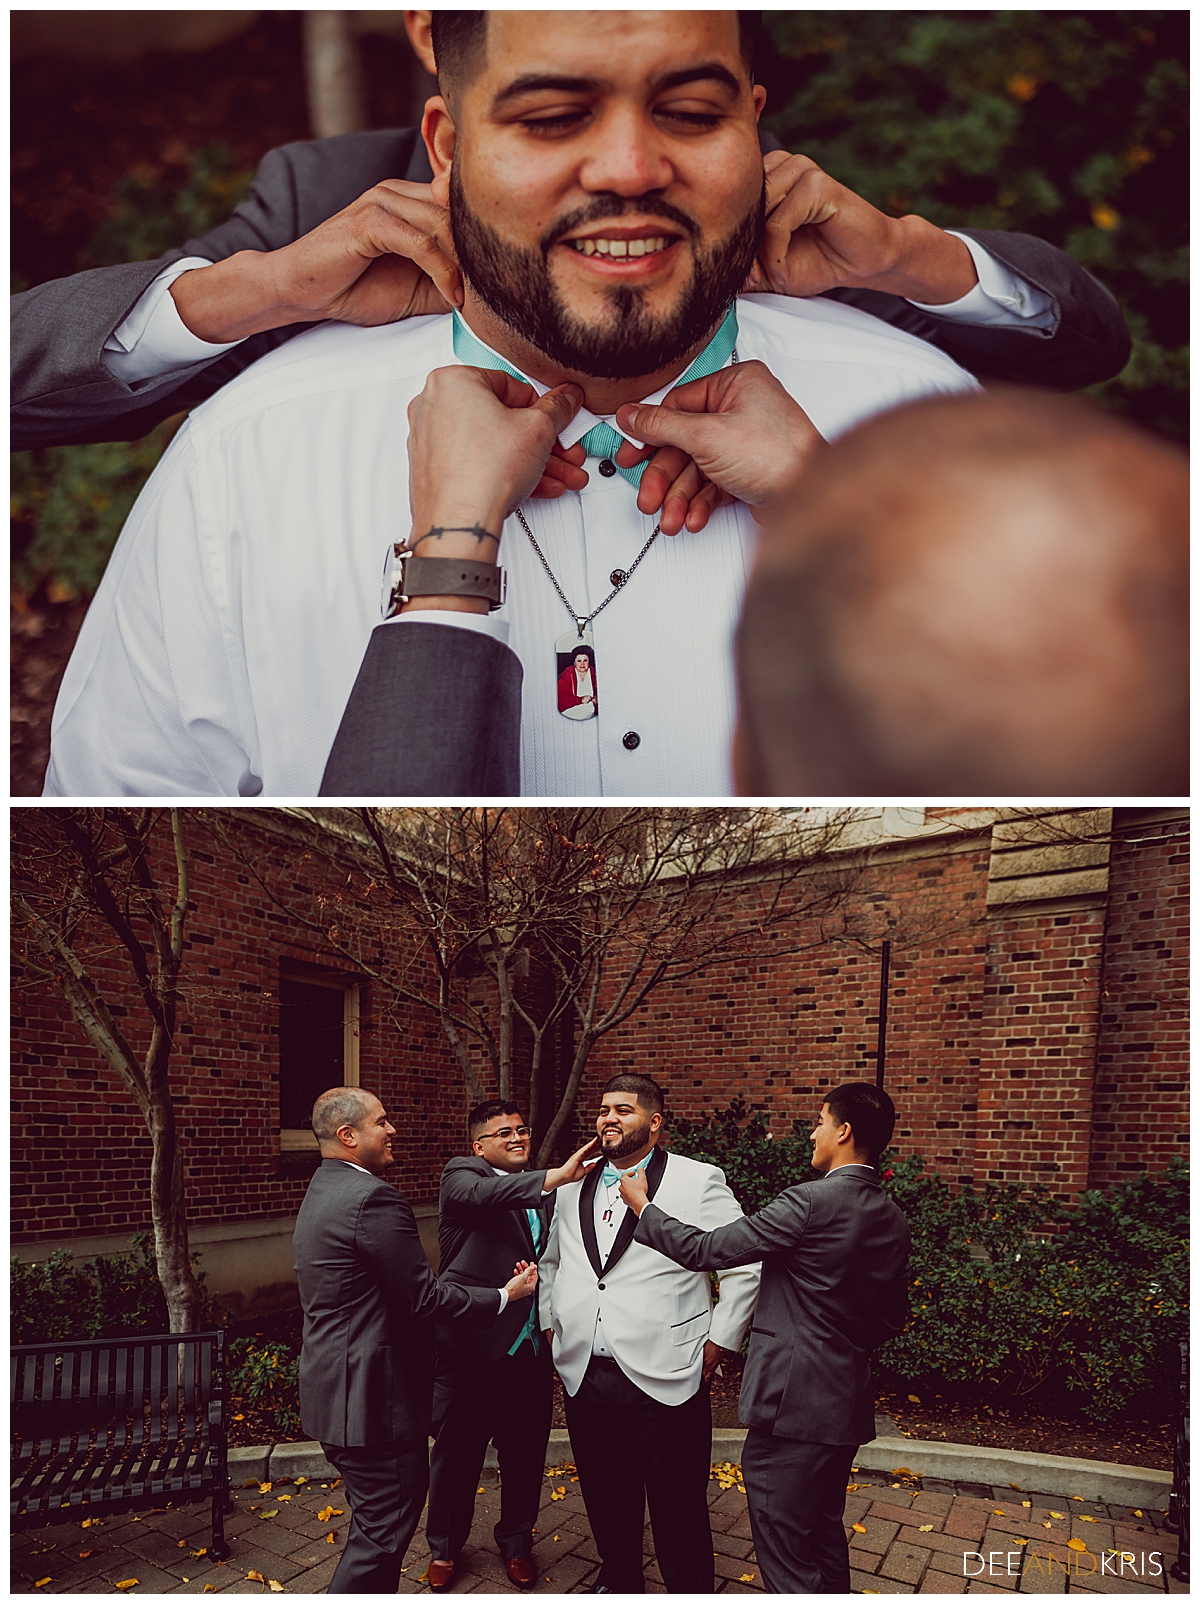 Two images: Top image of groomsmen helping groom put on his bowtie. Bottom image of groom being calmed down by groomsmen.